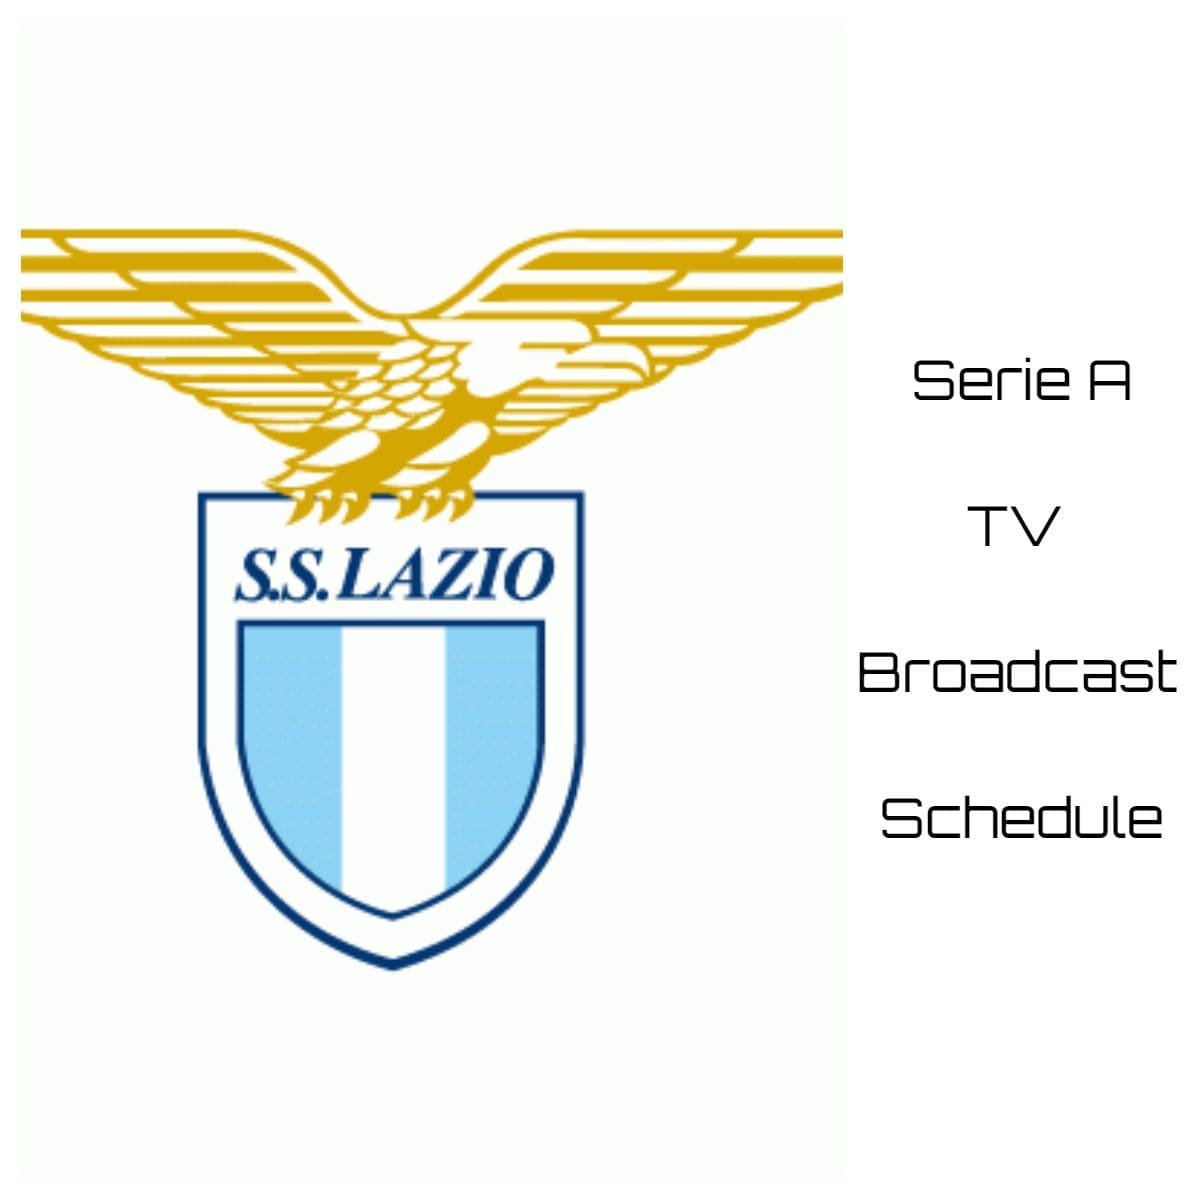 Lazio TV Broadcast Schedule